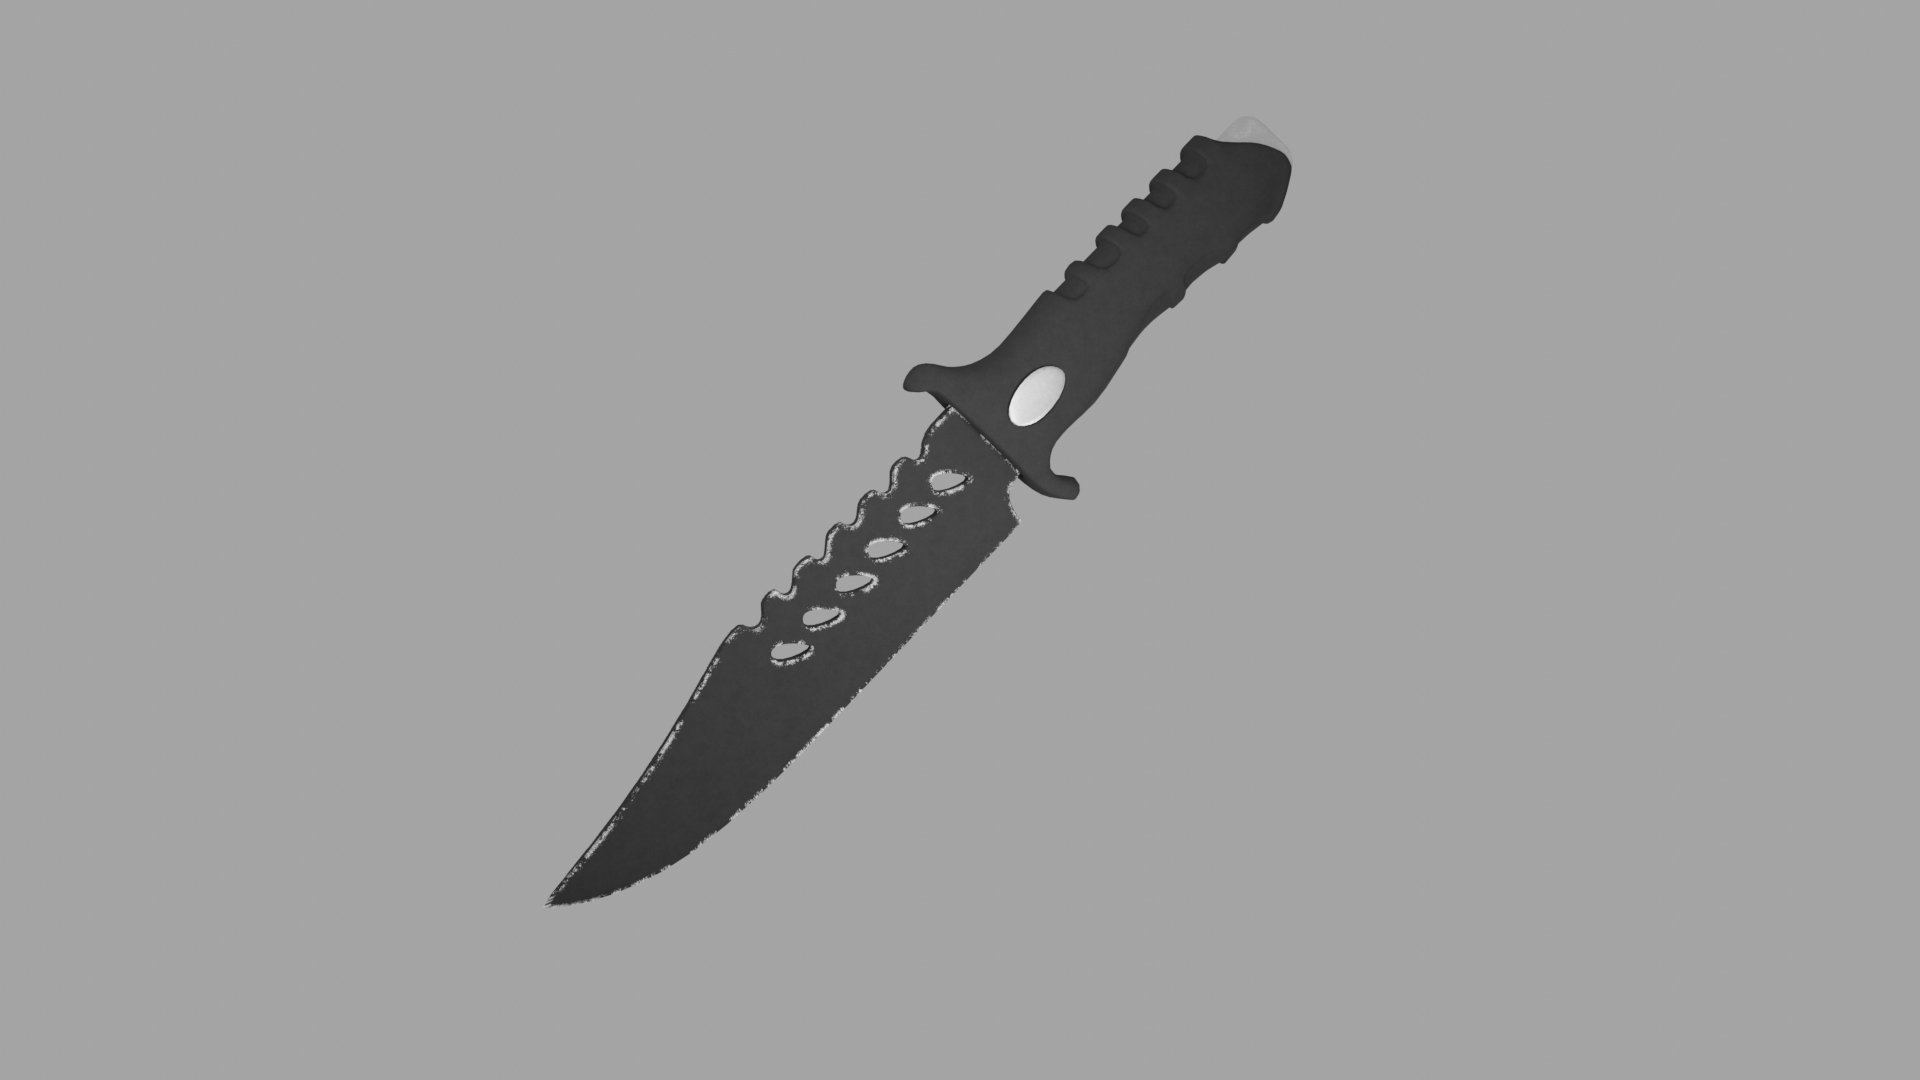 knife hunt 3D model https://p.turbosquid.com/ts-thumb/Zg/tx43pn/vR/huntknife/png/1605217424/1920x1080/turn_fit_q99/8fcfe9749c6caed83425eb5fe00ae96461da39e0/huntknife-1.jpg